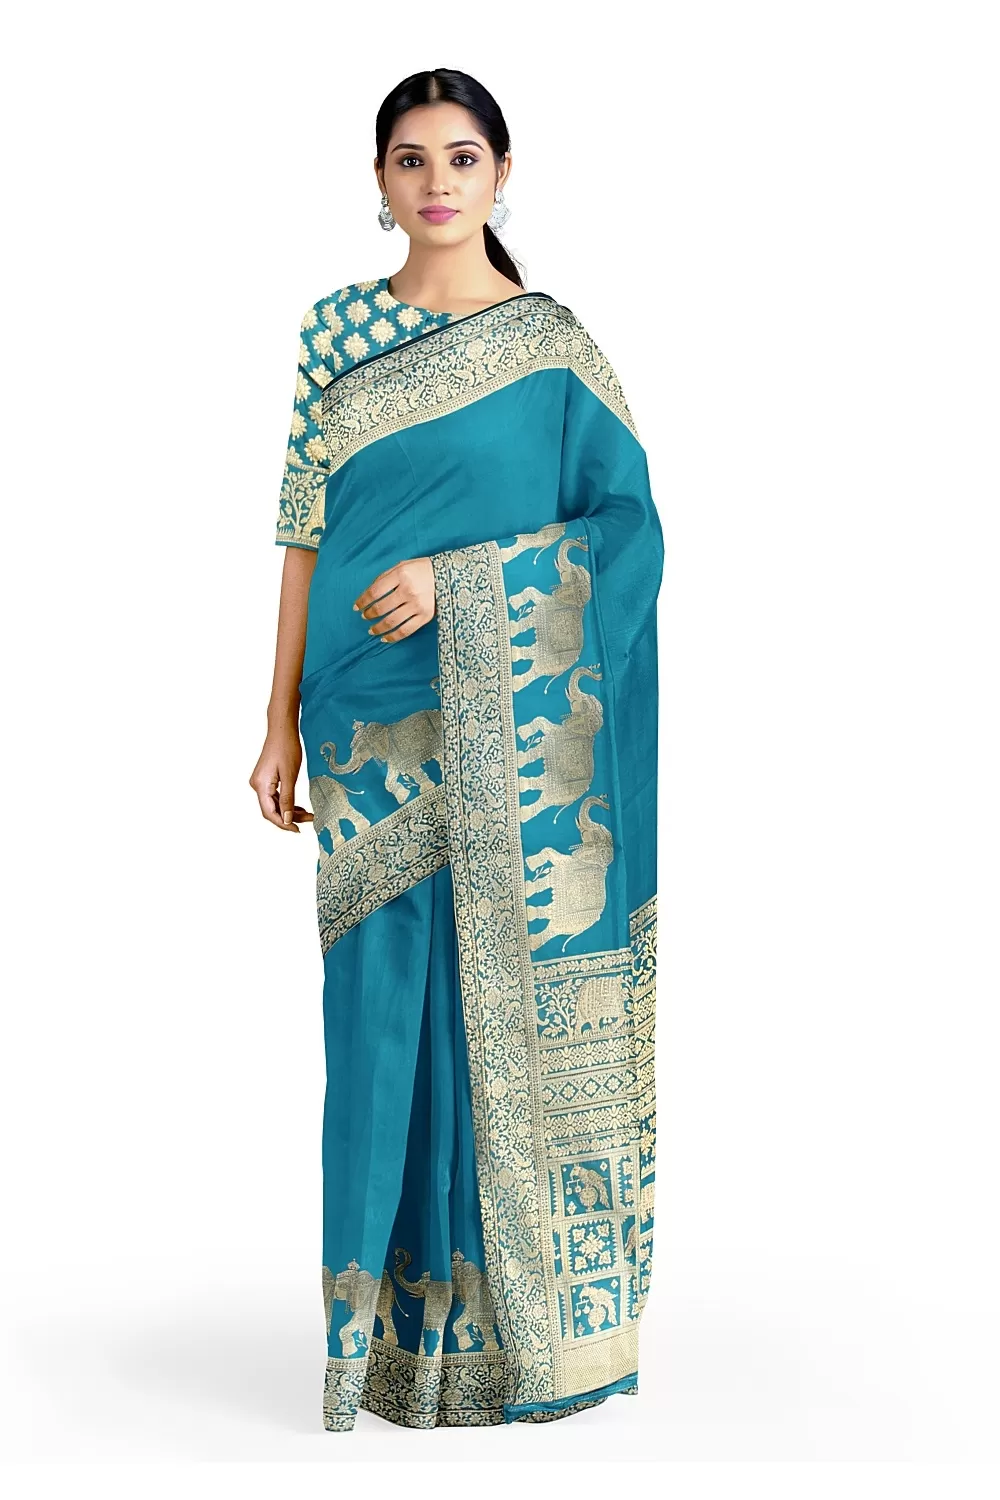 Firoji Colour Kanjivaram Soft Silk Saree with Heavy Blouse